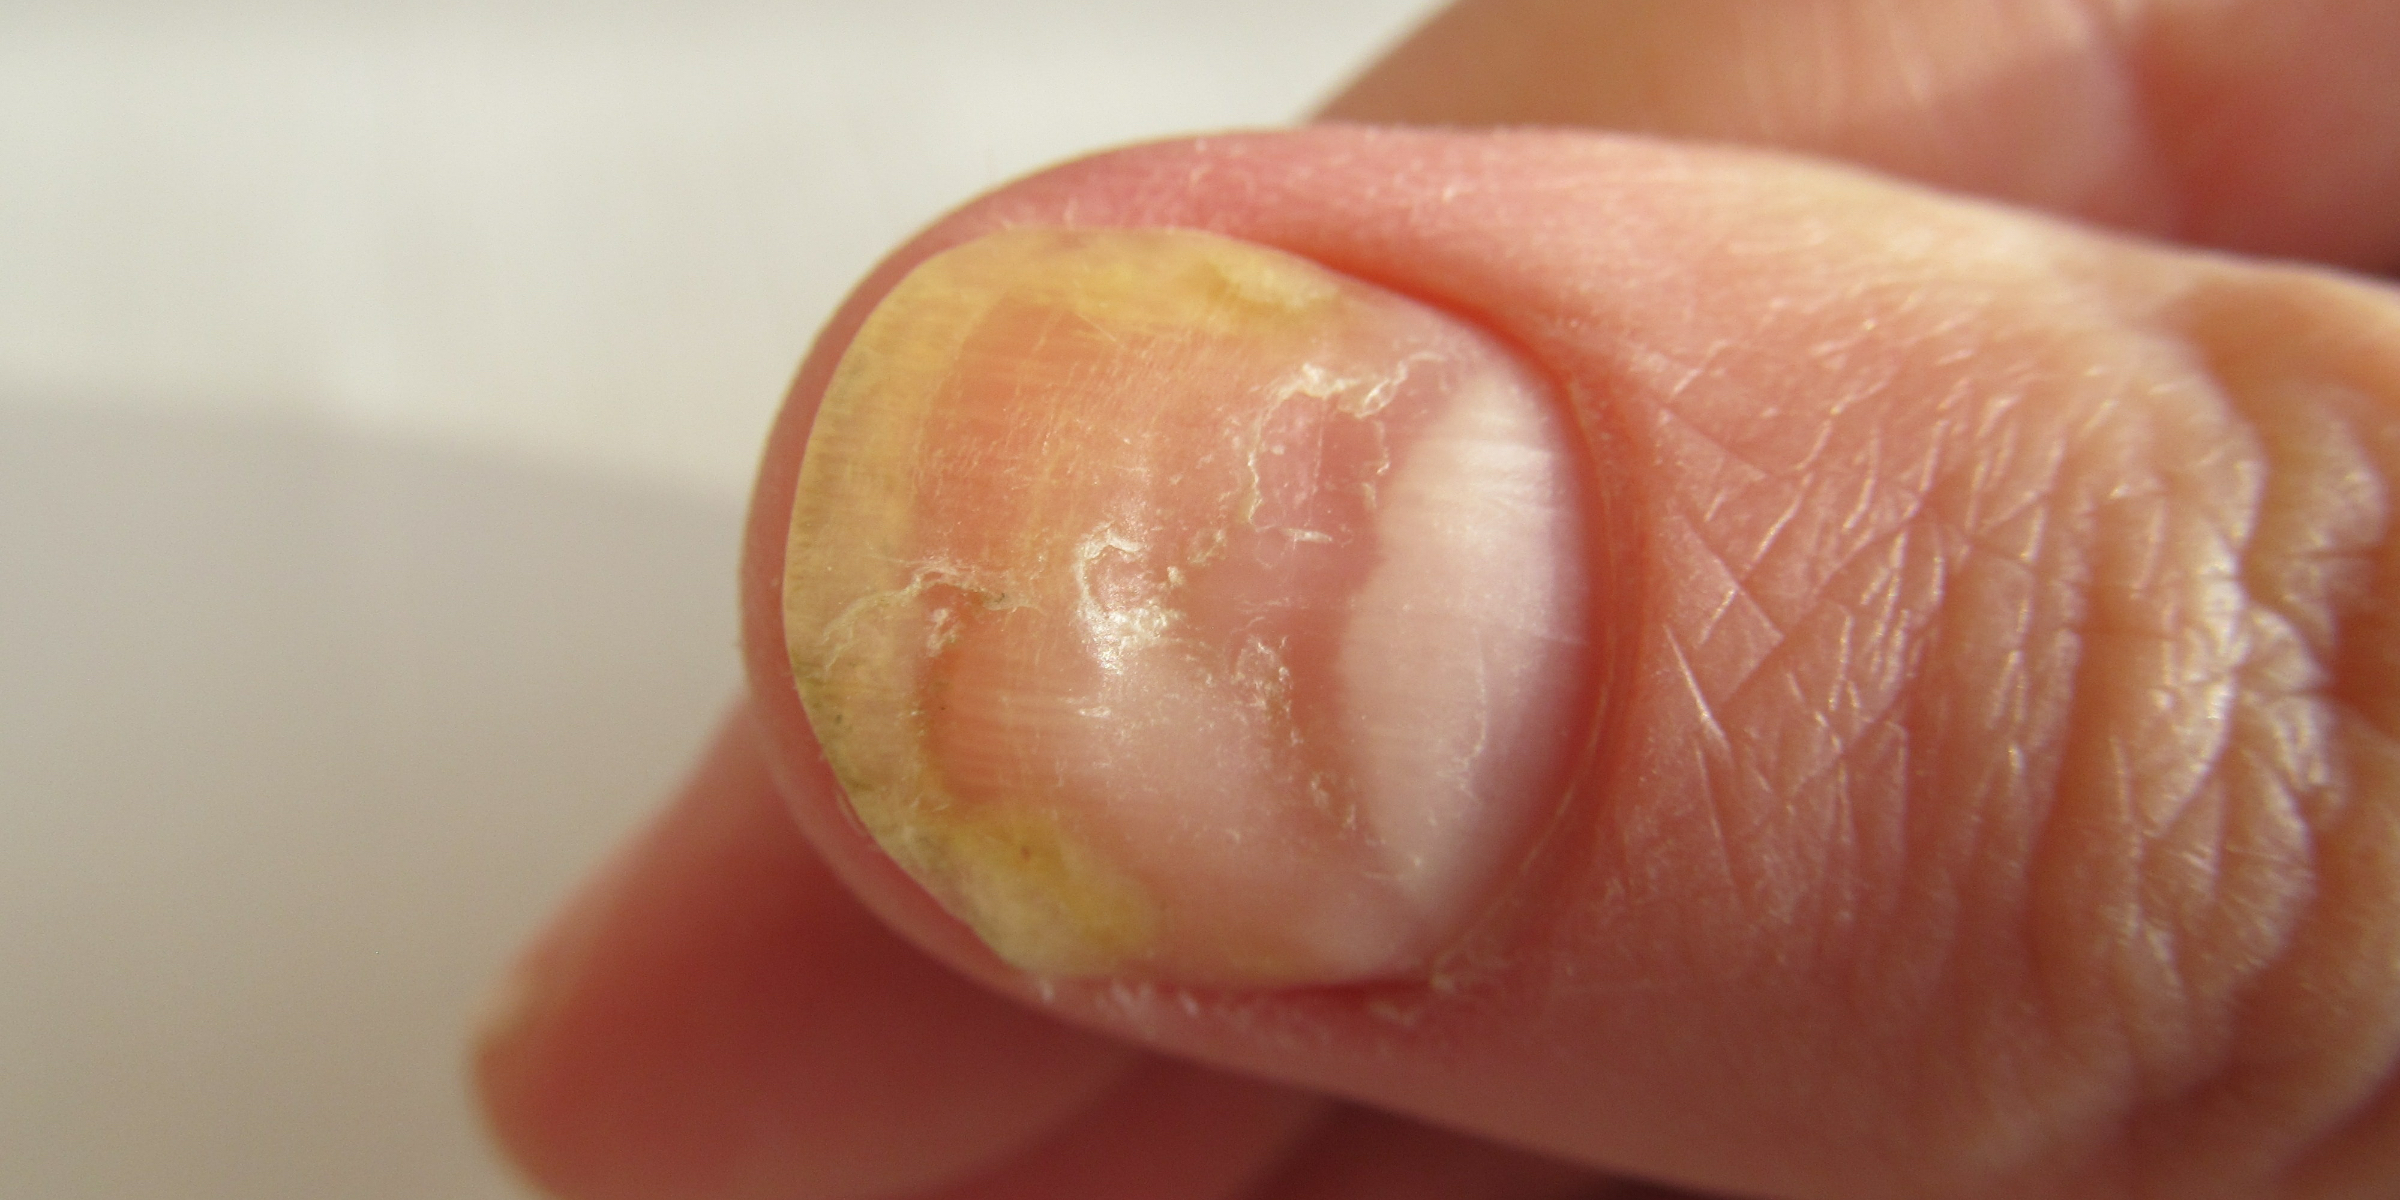 a nail disorder in the thumb